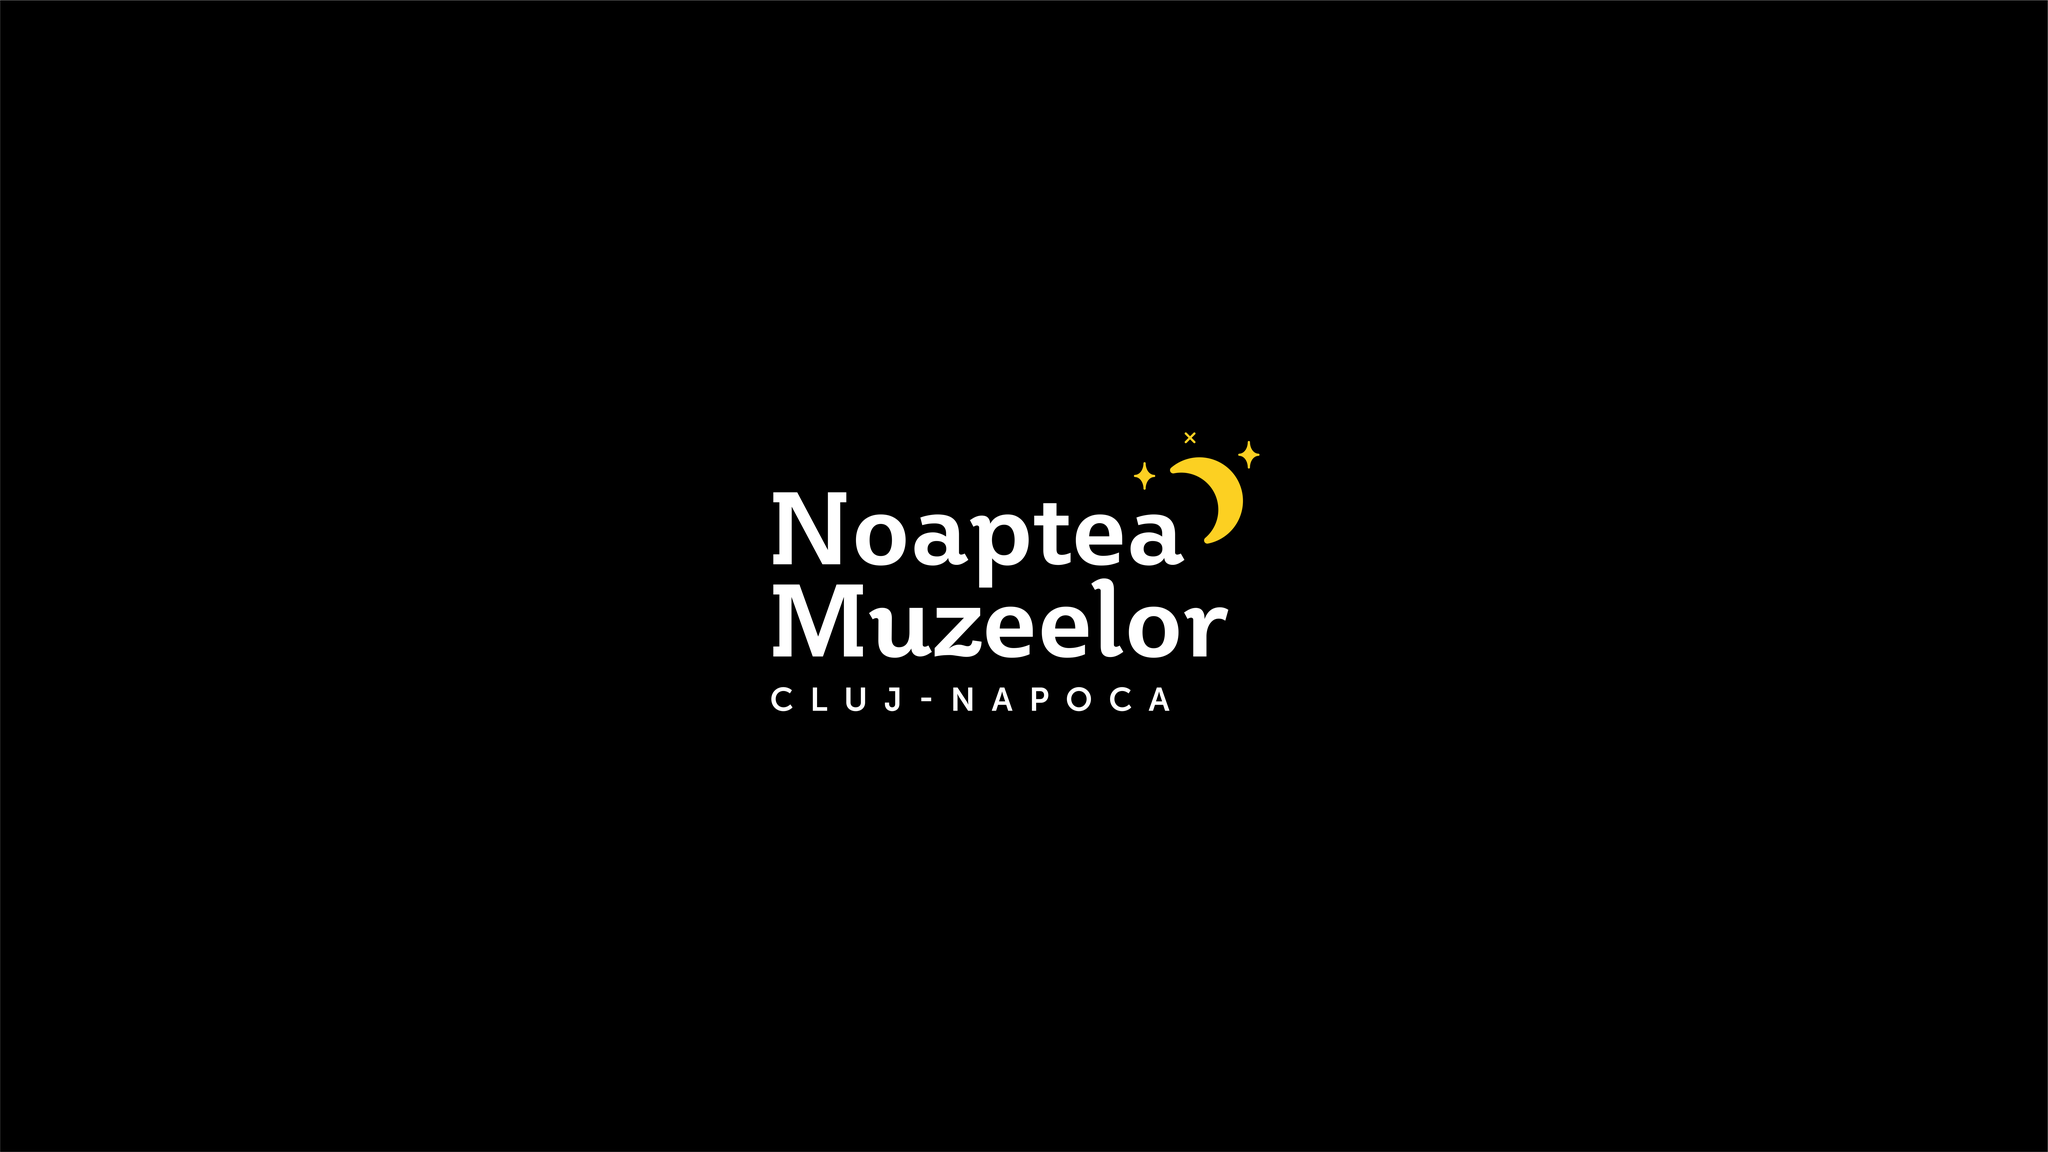 Noaptea muzeelor la Cluj-Napoca